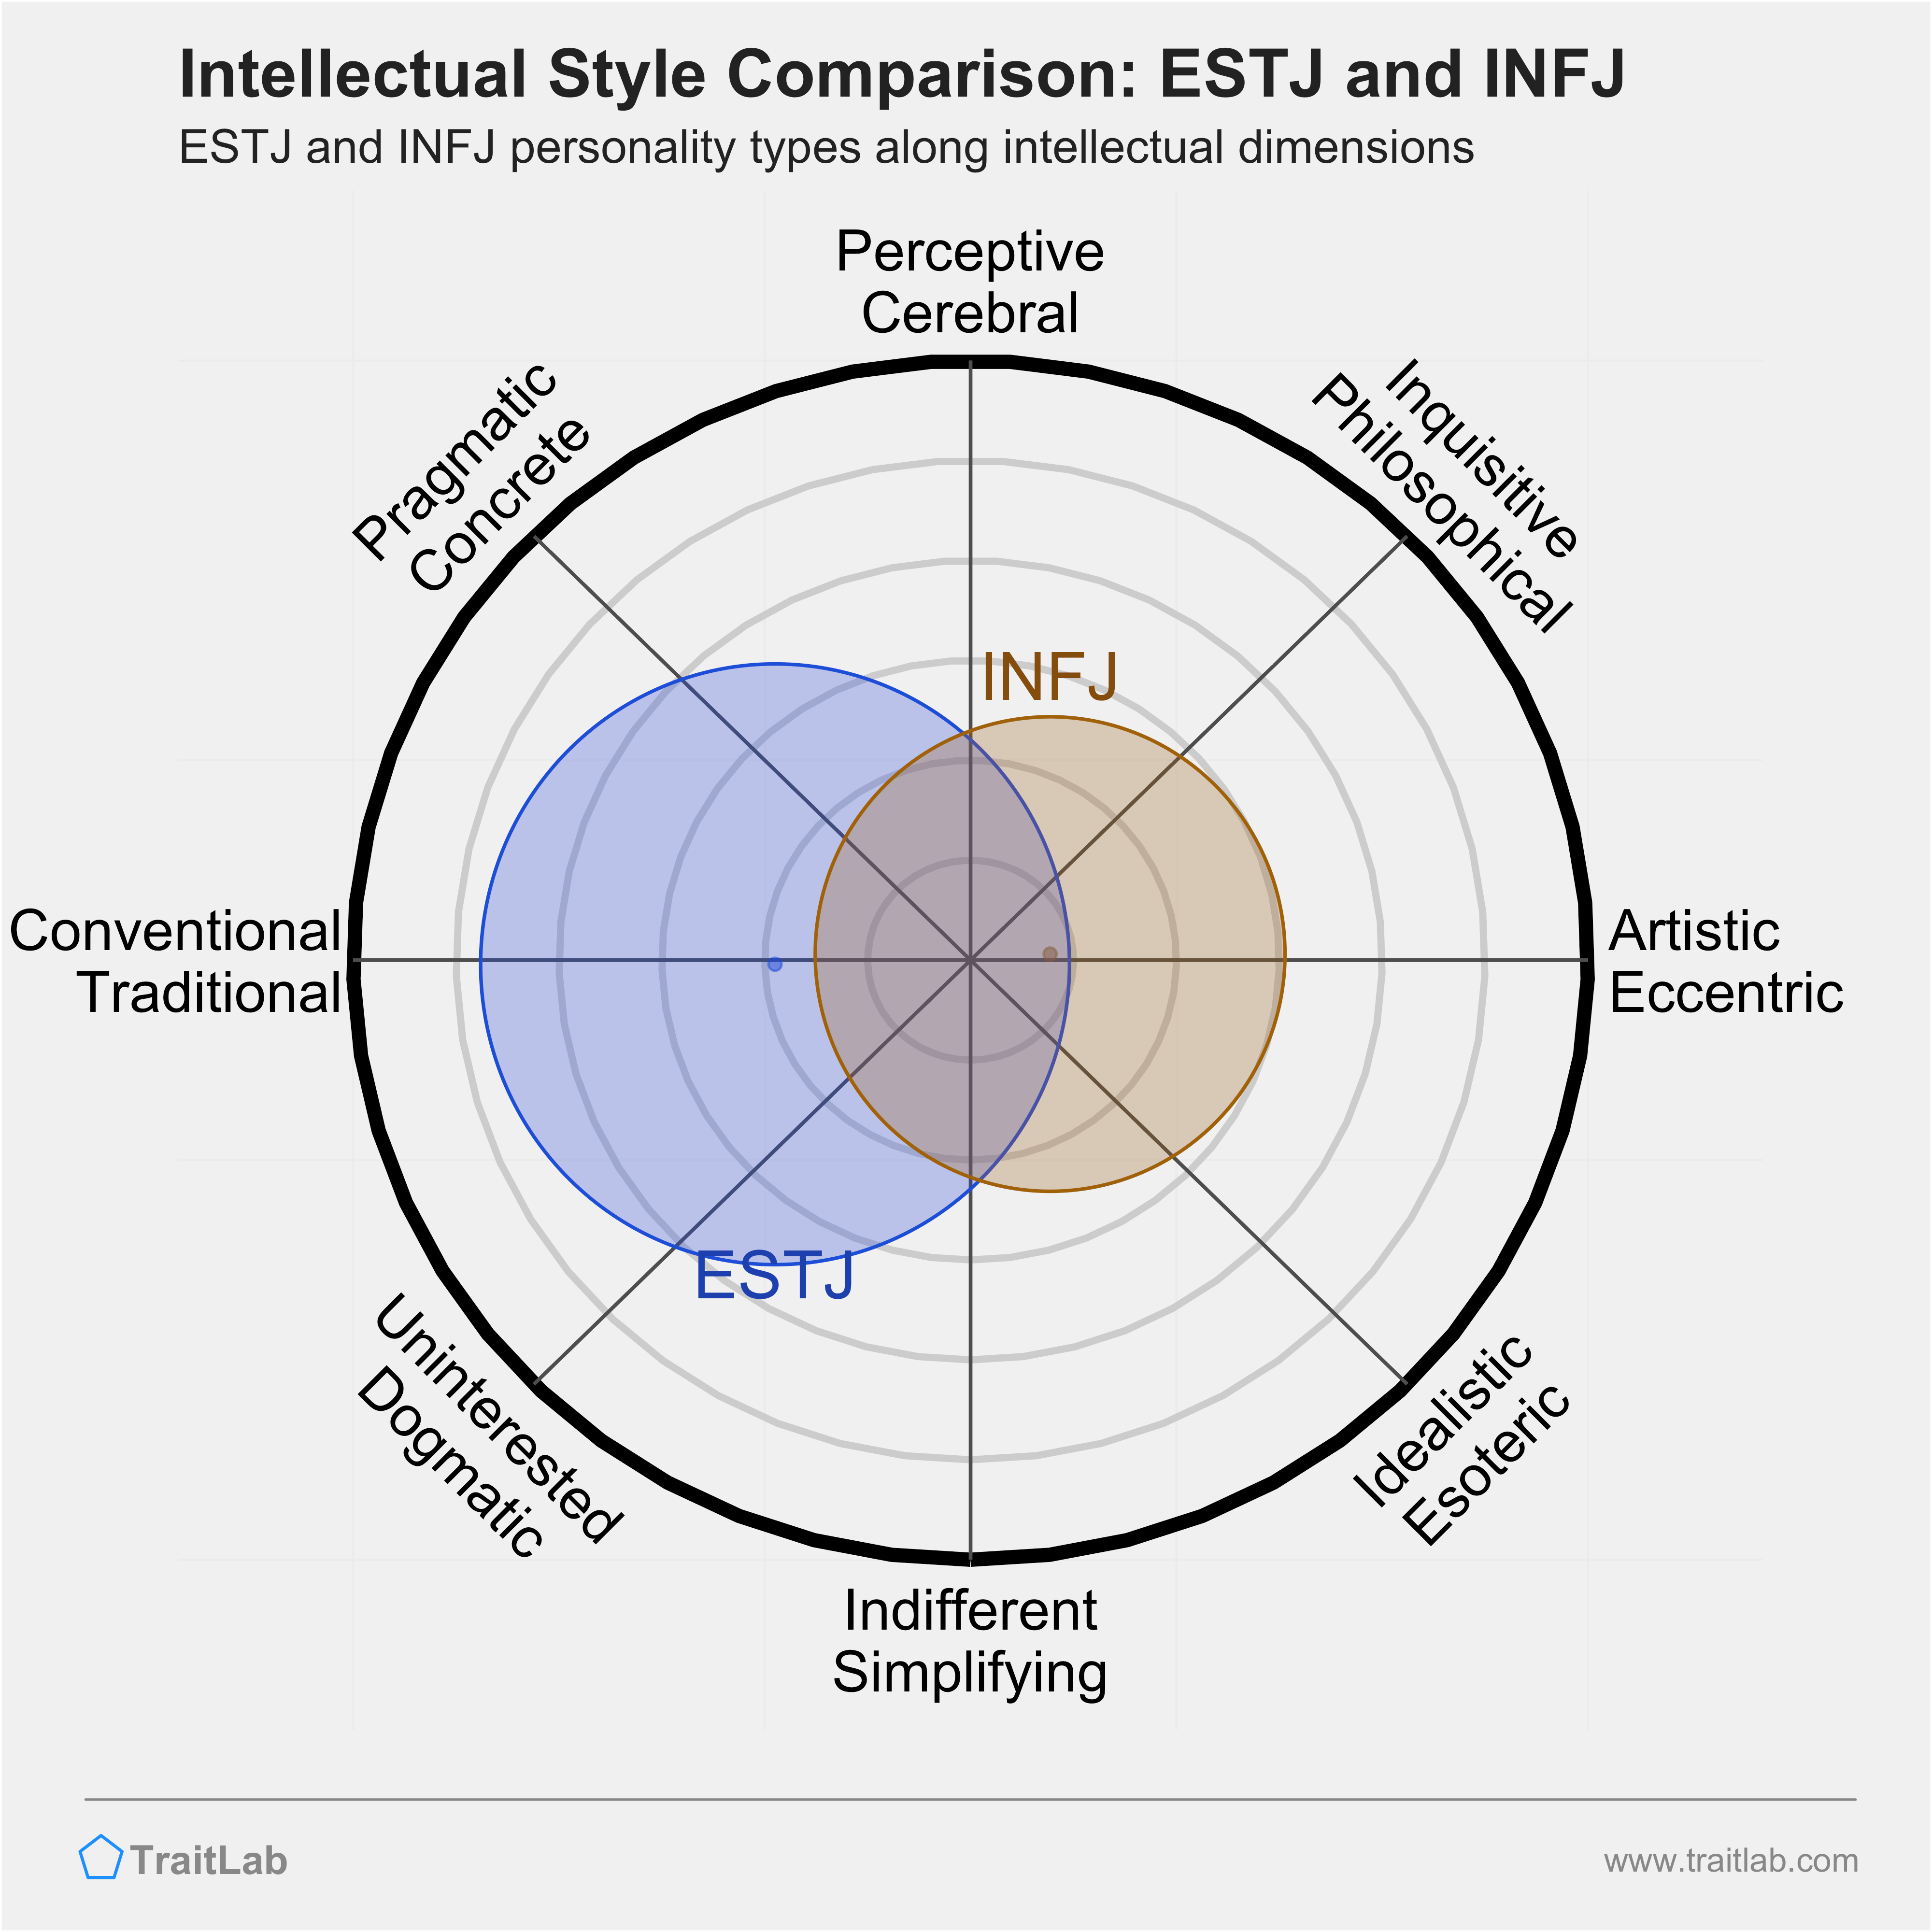 ESTJ and INFJ comparison across intellectual dimensions